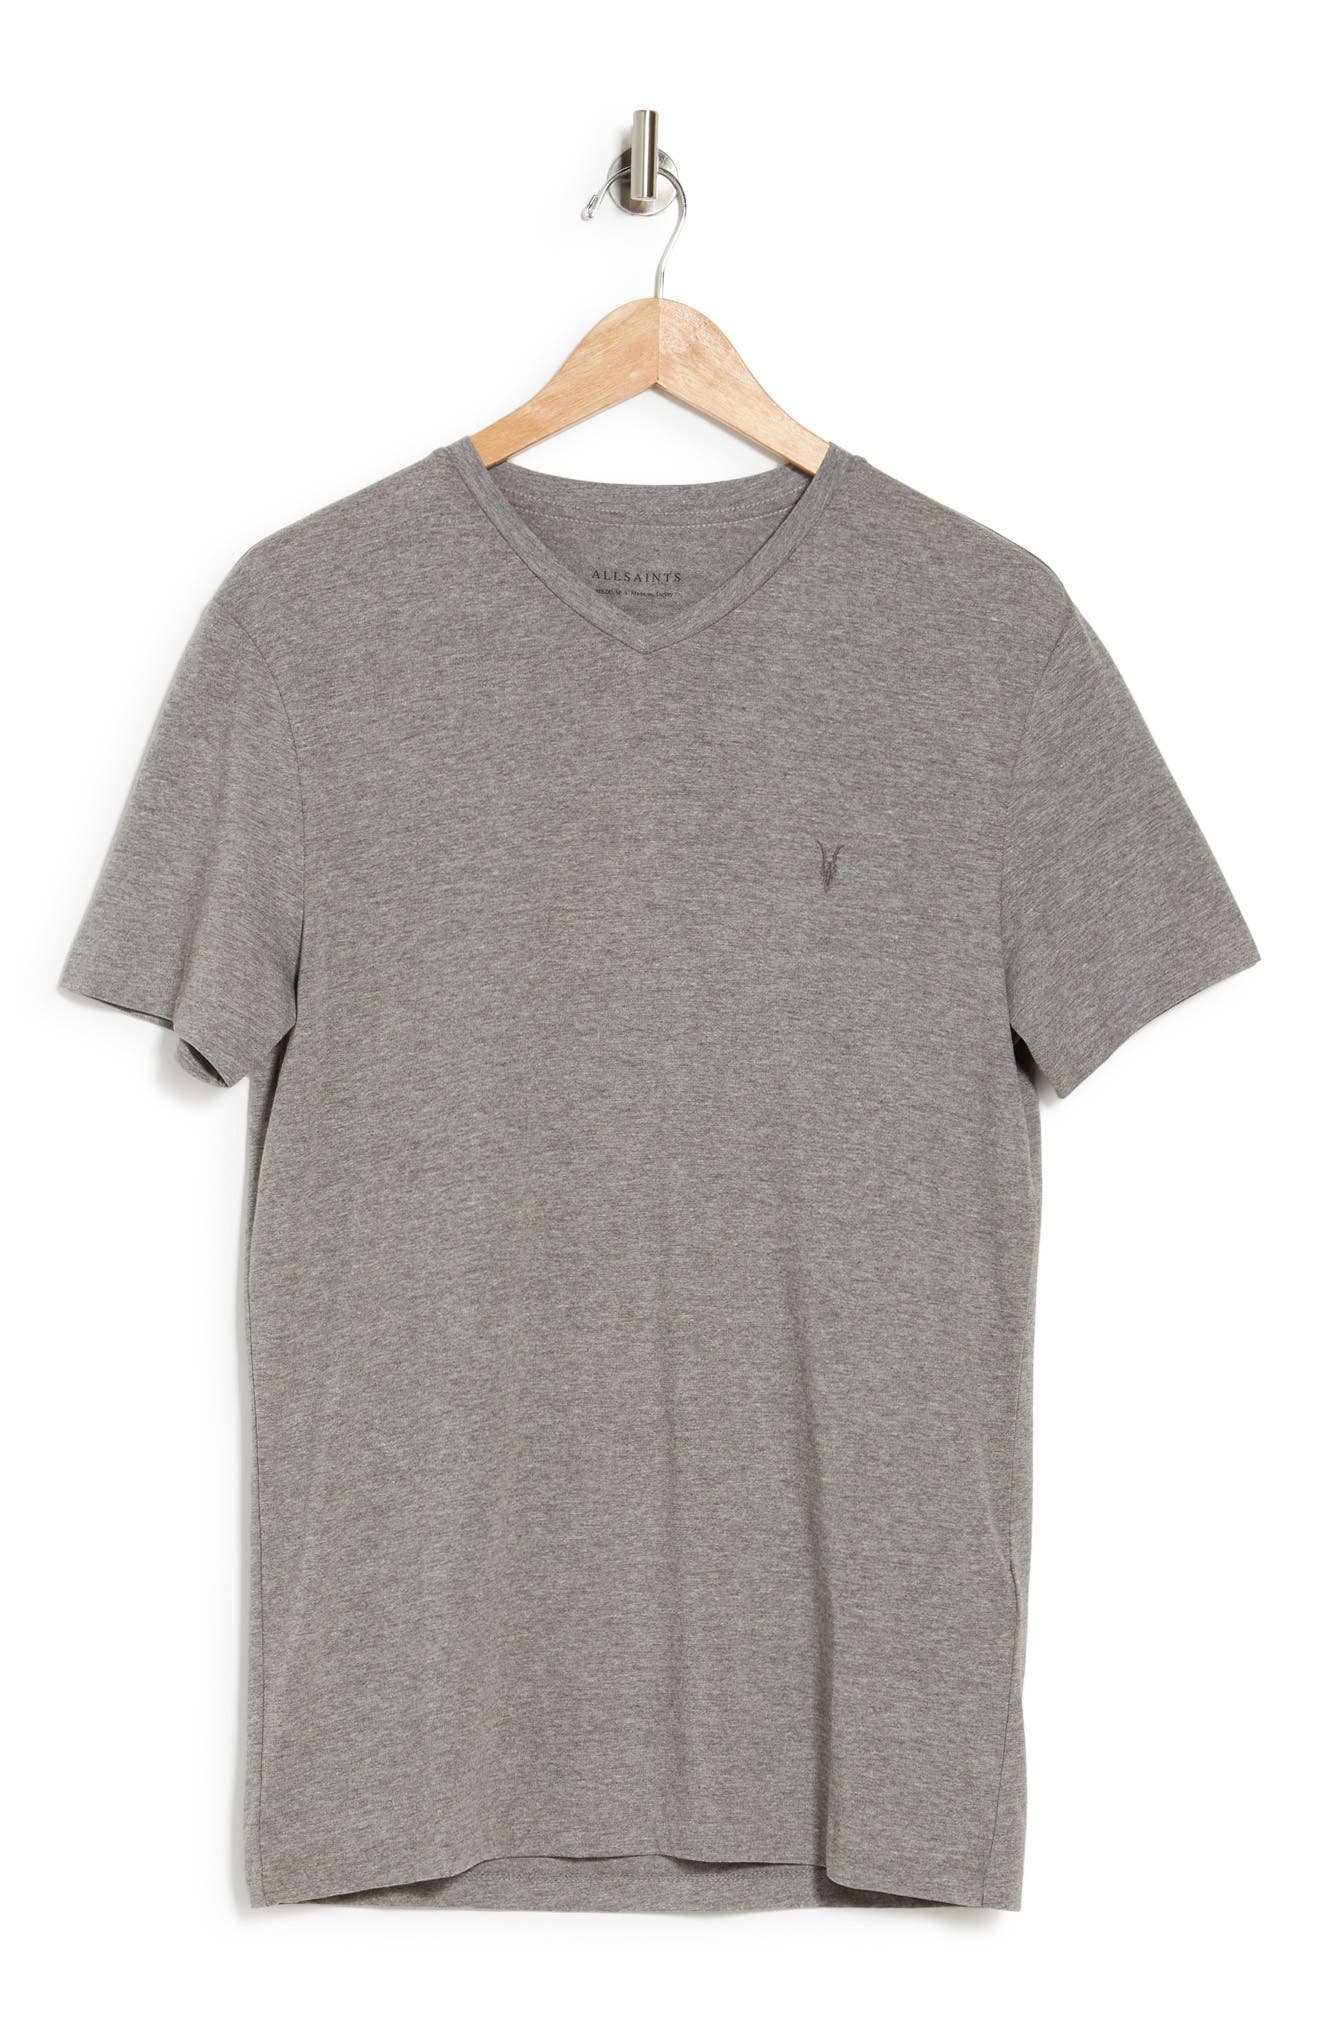 Allsaints Tonic V-neck T-shirt In Soot Grey Marl